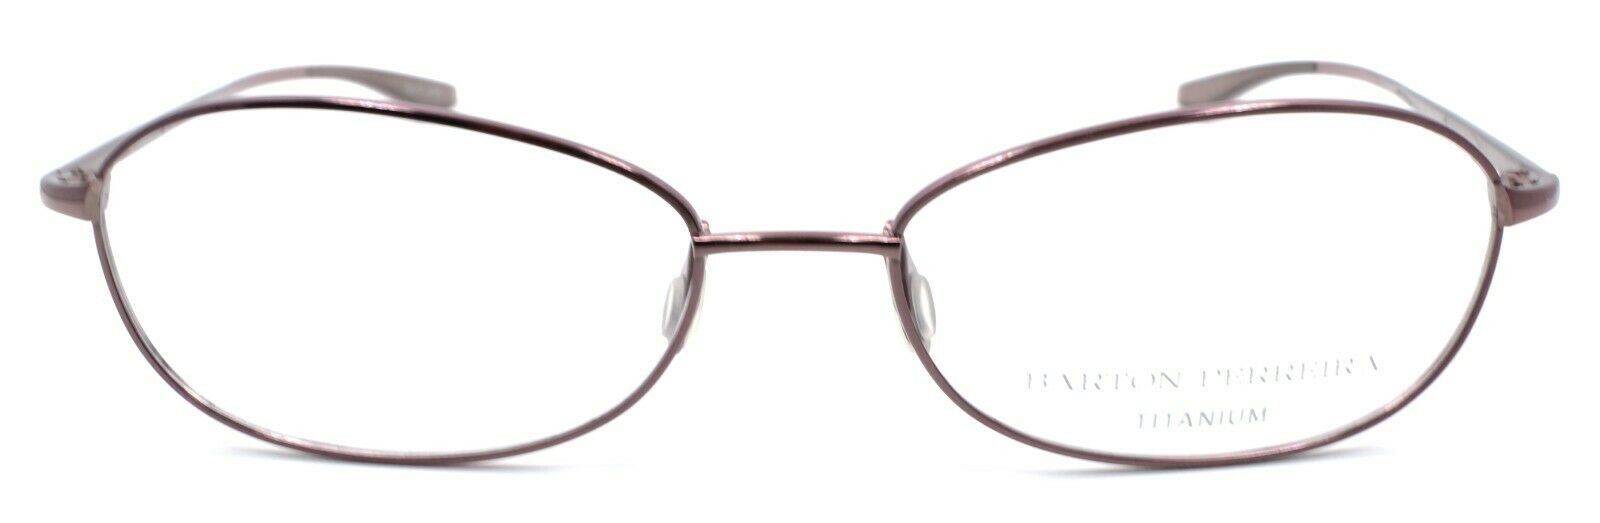 2-Barton Perreira Hazel DUN Women's Eyeglasses Frames Titanium 53-16-133 Dune-672263038412-IKSpecs